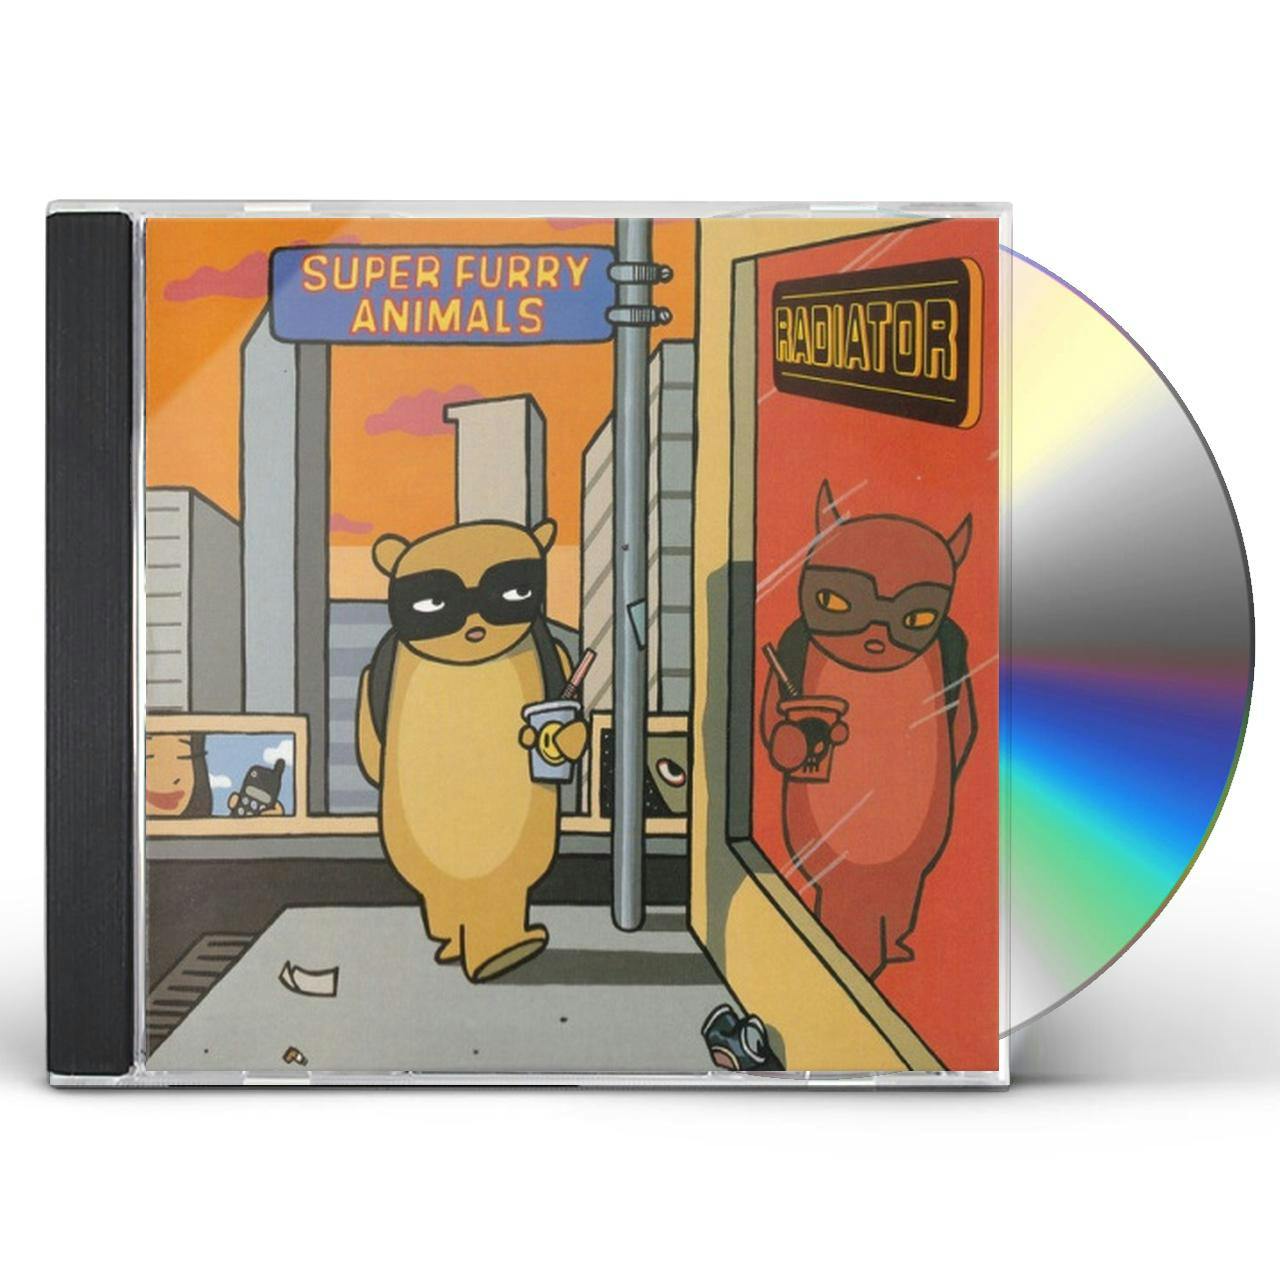 Super Furry Animals RADIATOR CD